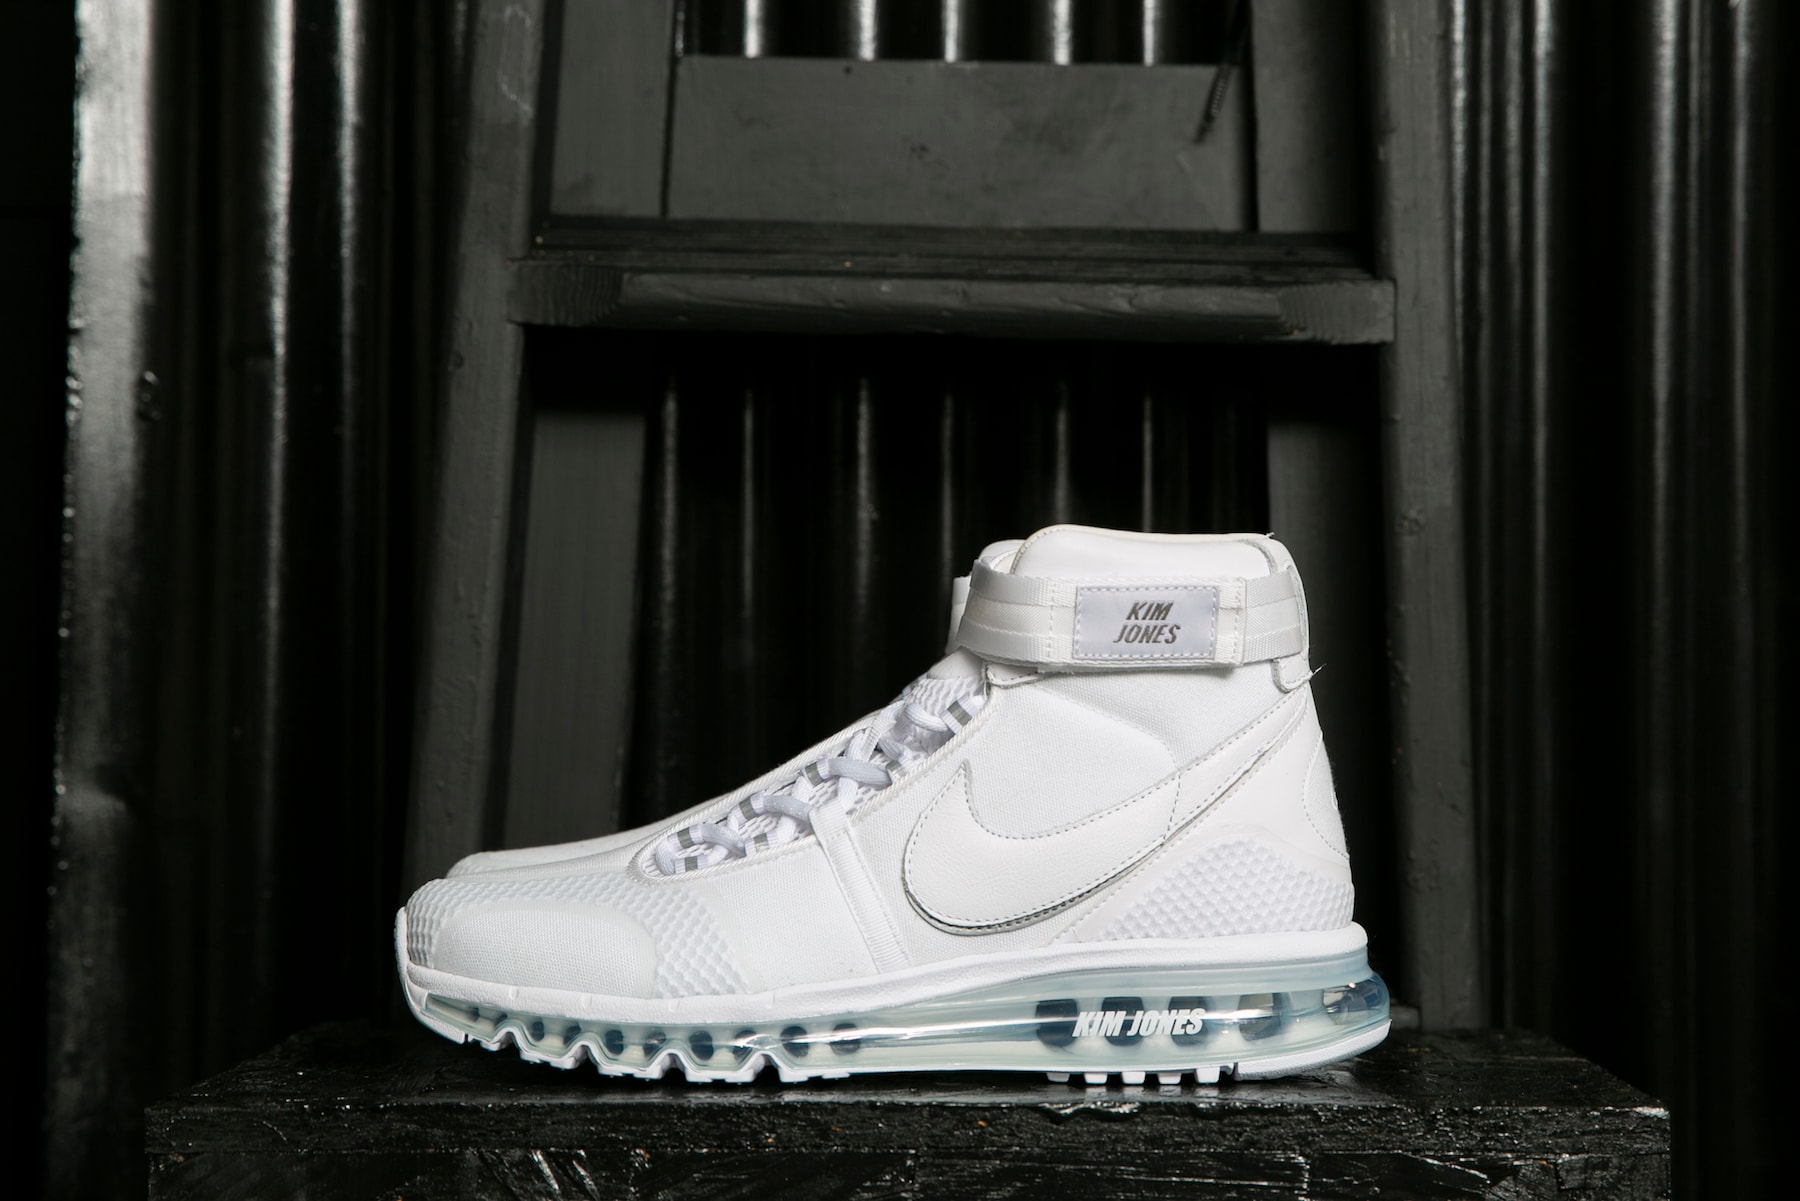 Kim Jones x NikeLab Collection Exclusive to DSM